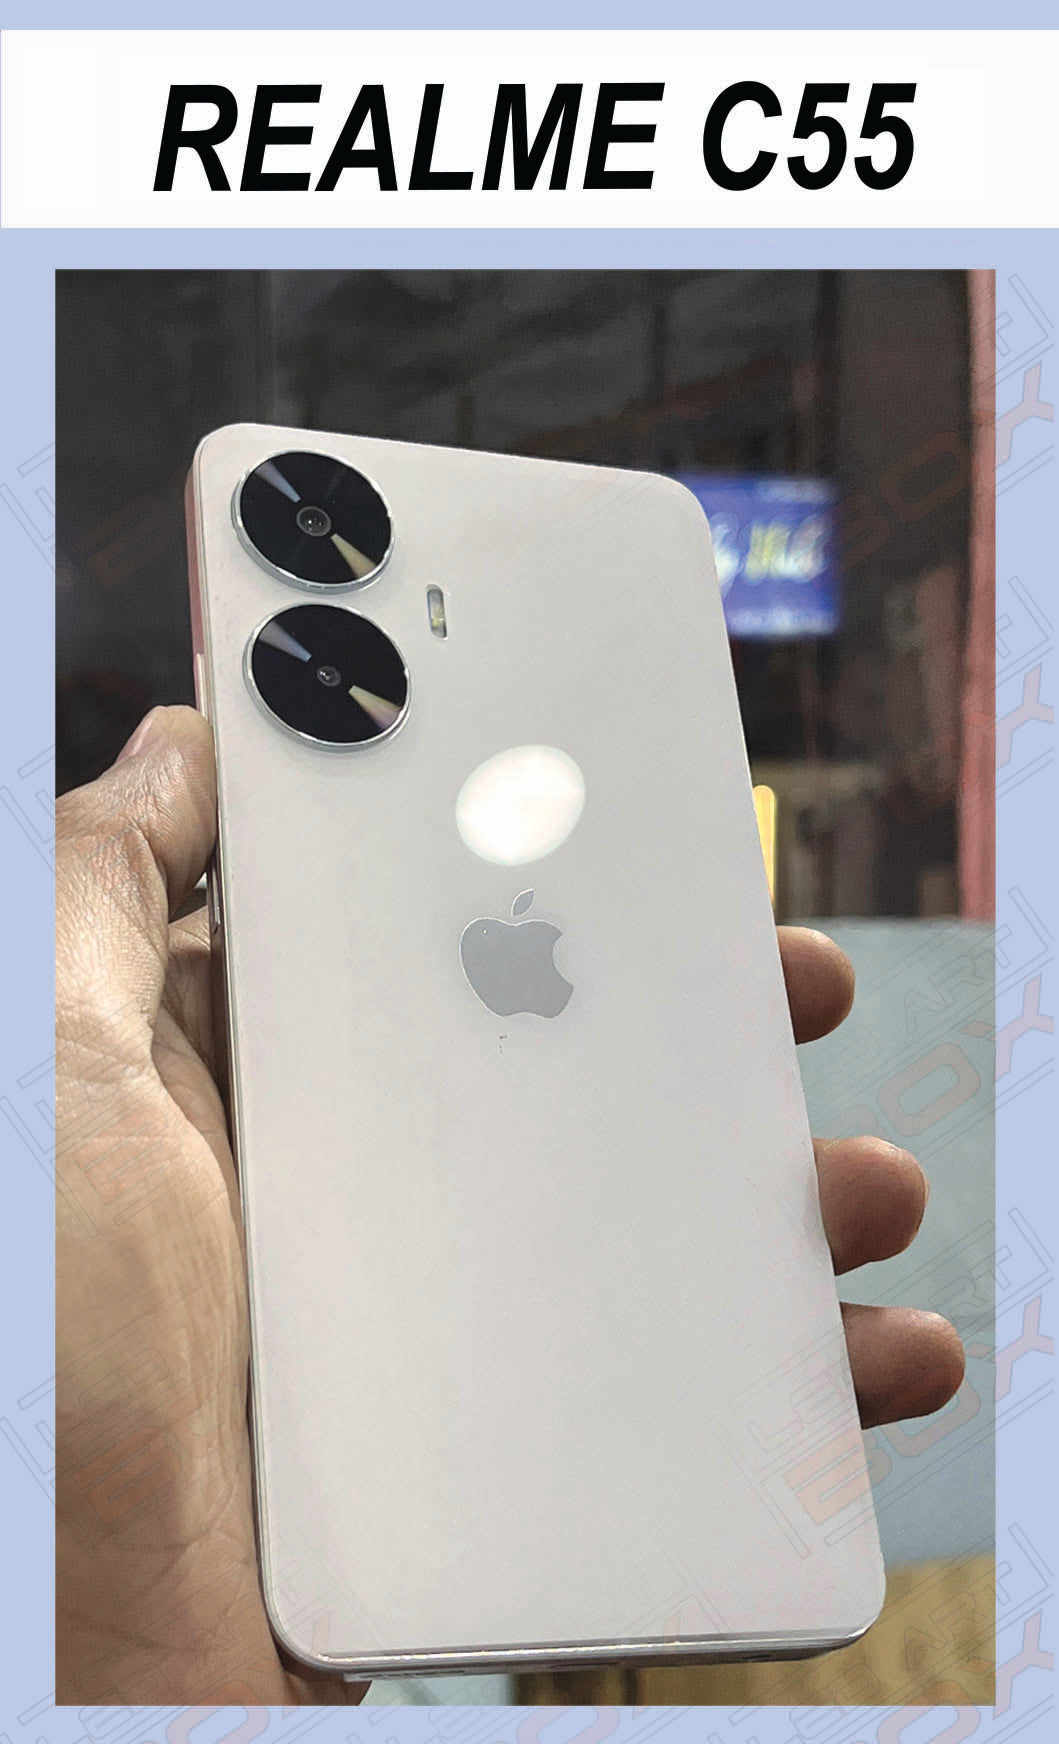 Unaxo Apple iphone Printed Back Cover for Realme C55, Realme C 55